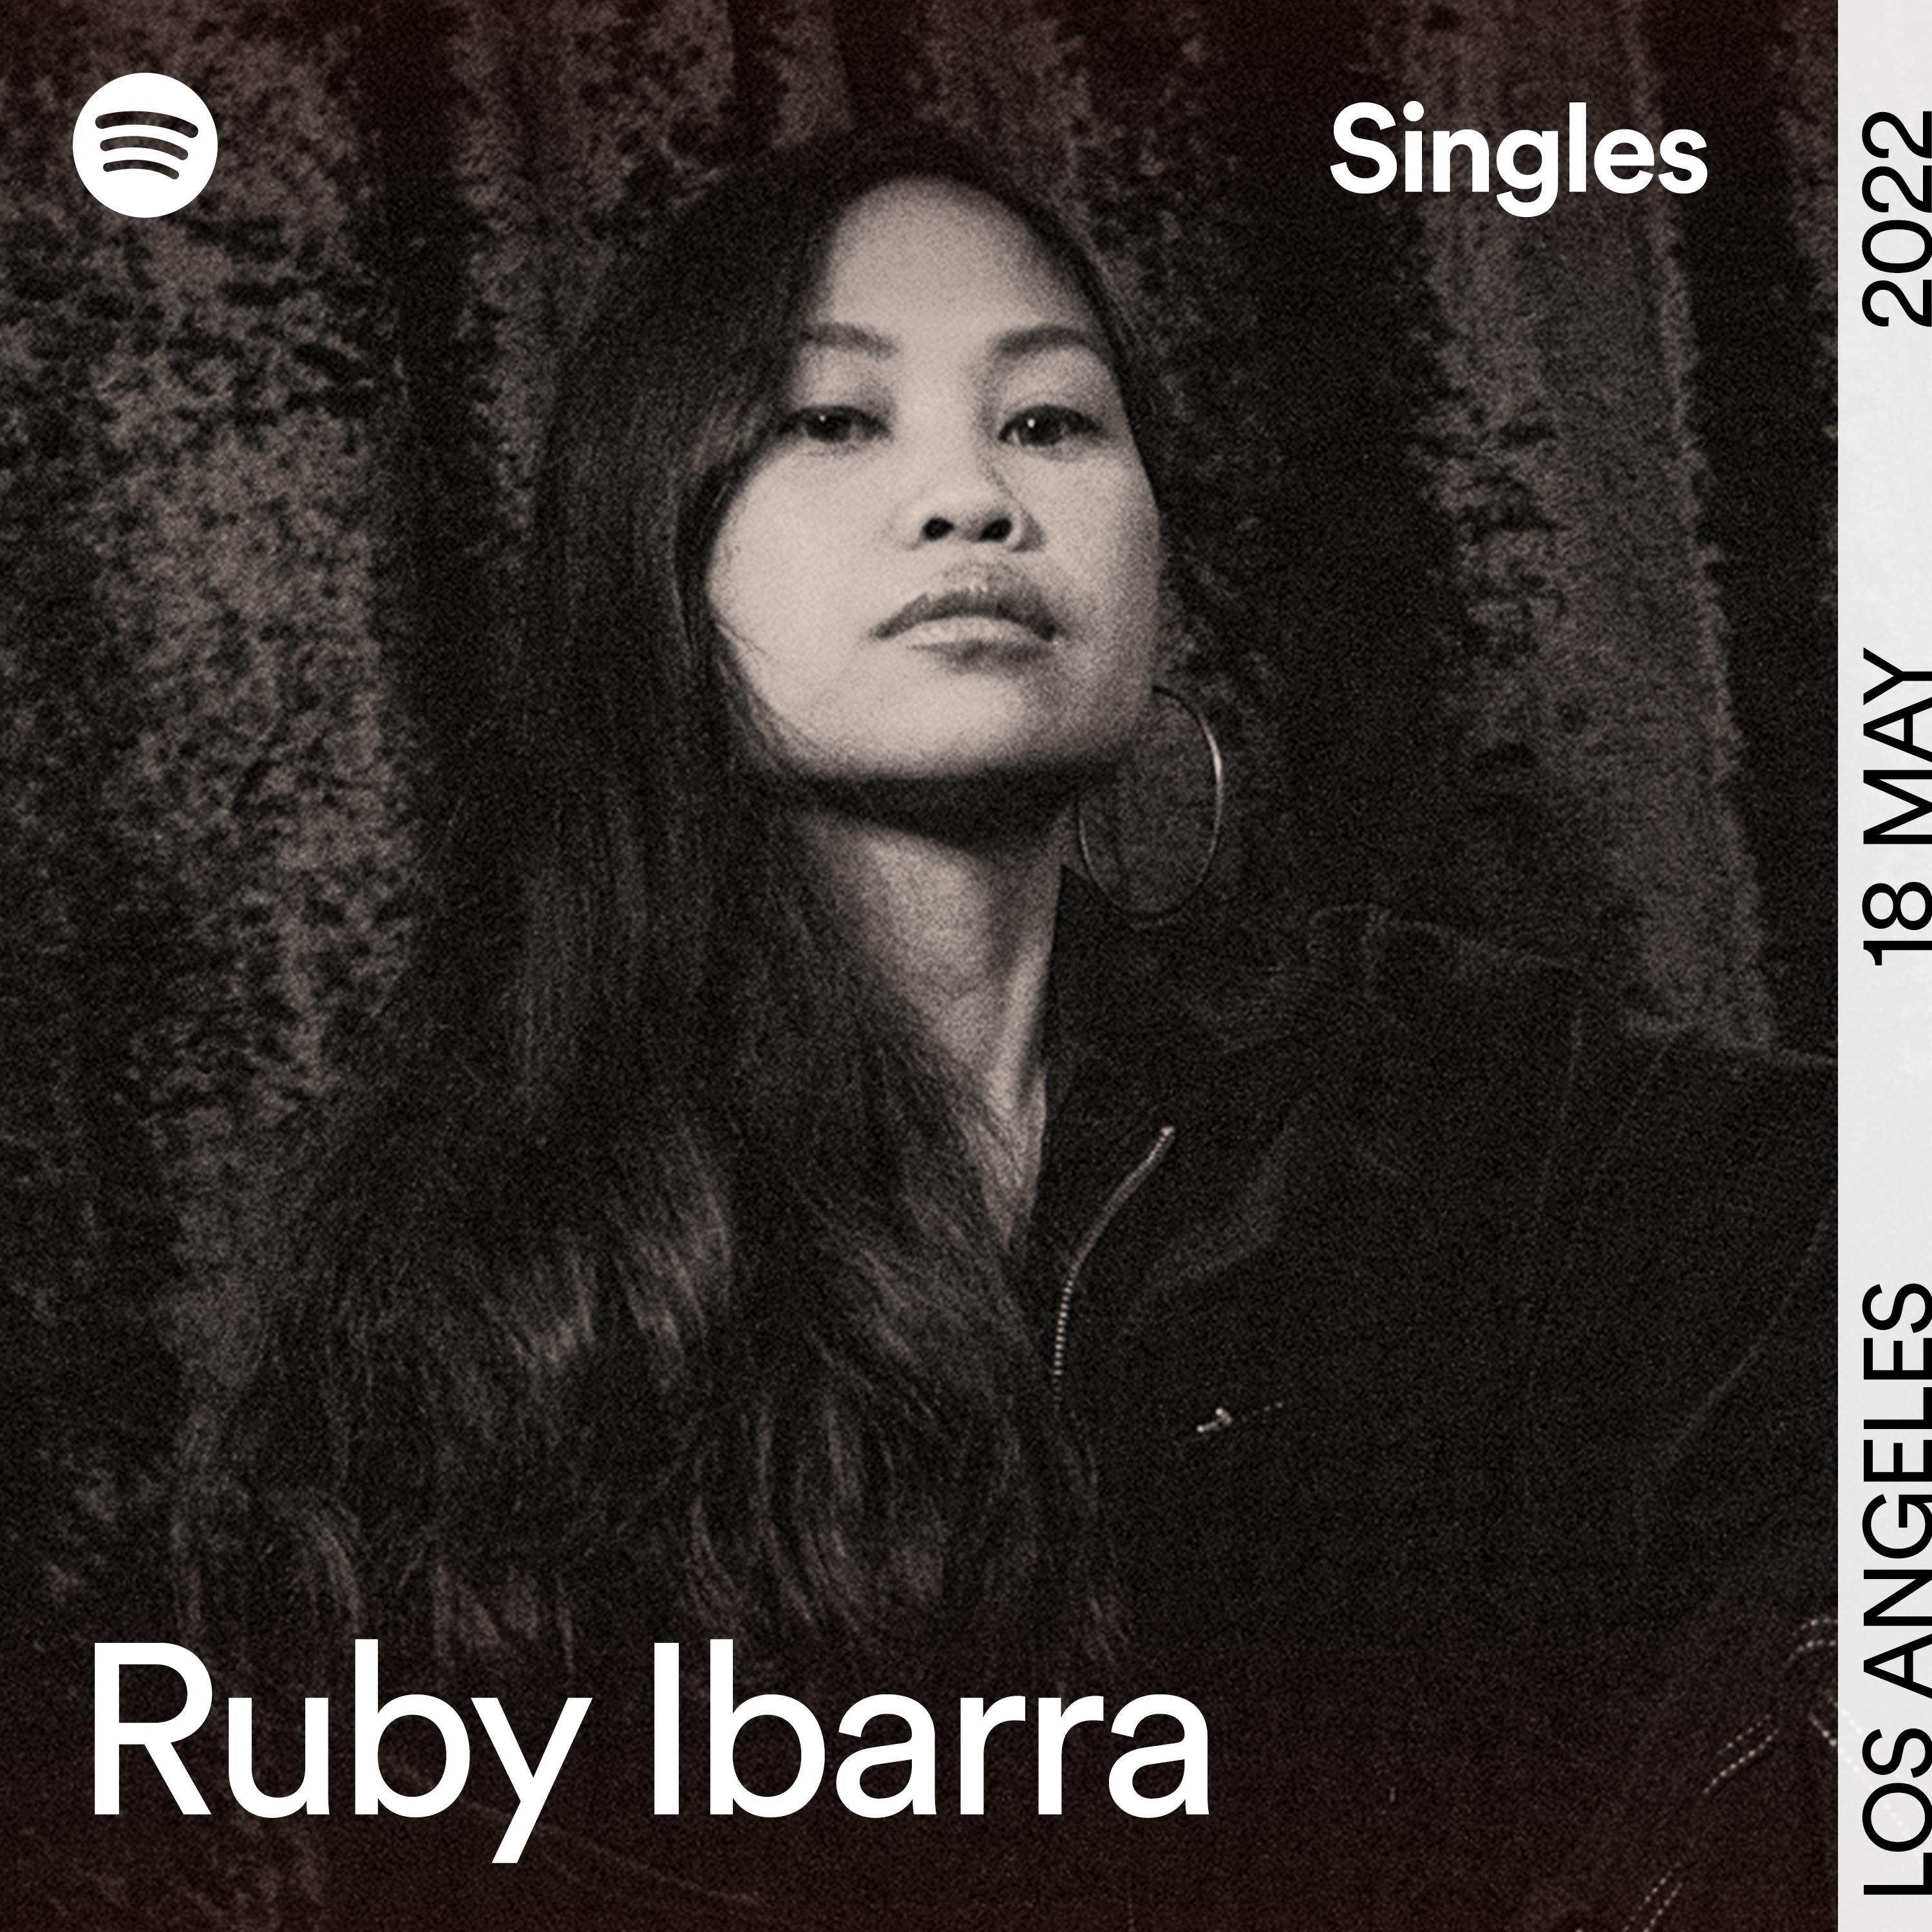 Ruby Ibarra - A Thousand Cuts (Spotify Singles) (feat. Ann One & AJ Rafael) (Remix)